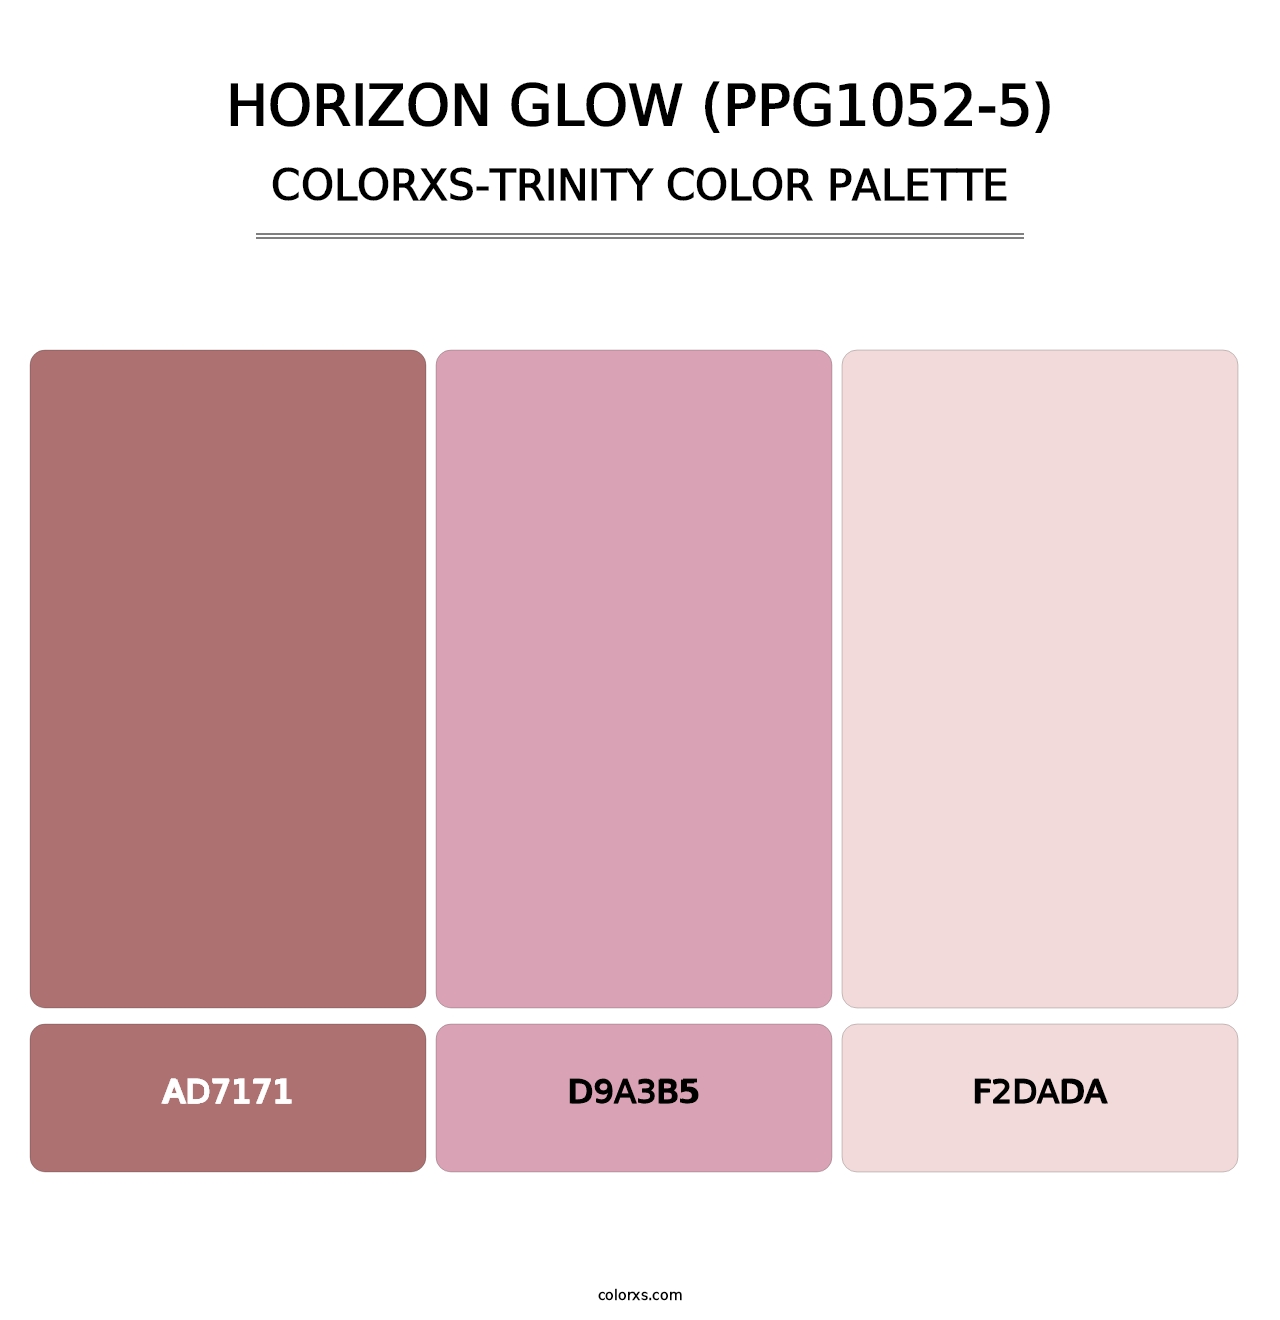 Horizon Glow (PPG1052-5) - Colorxs Trinity Palette